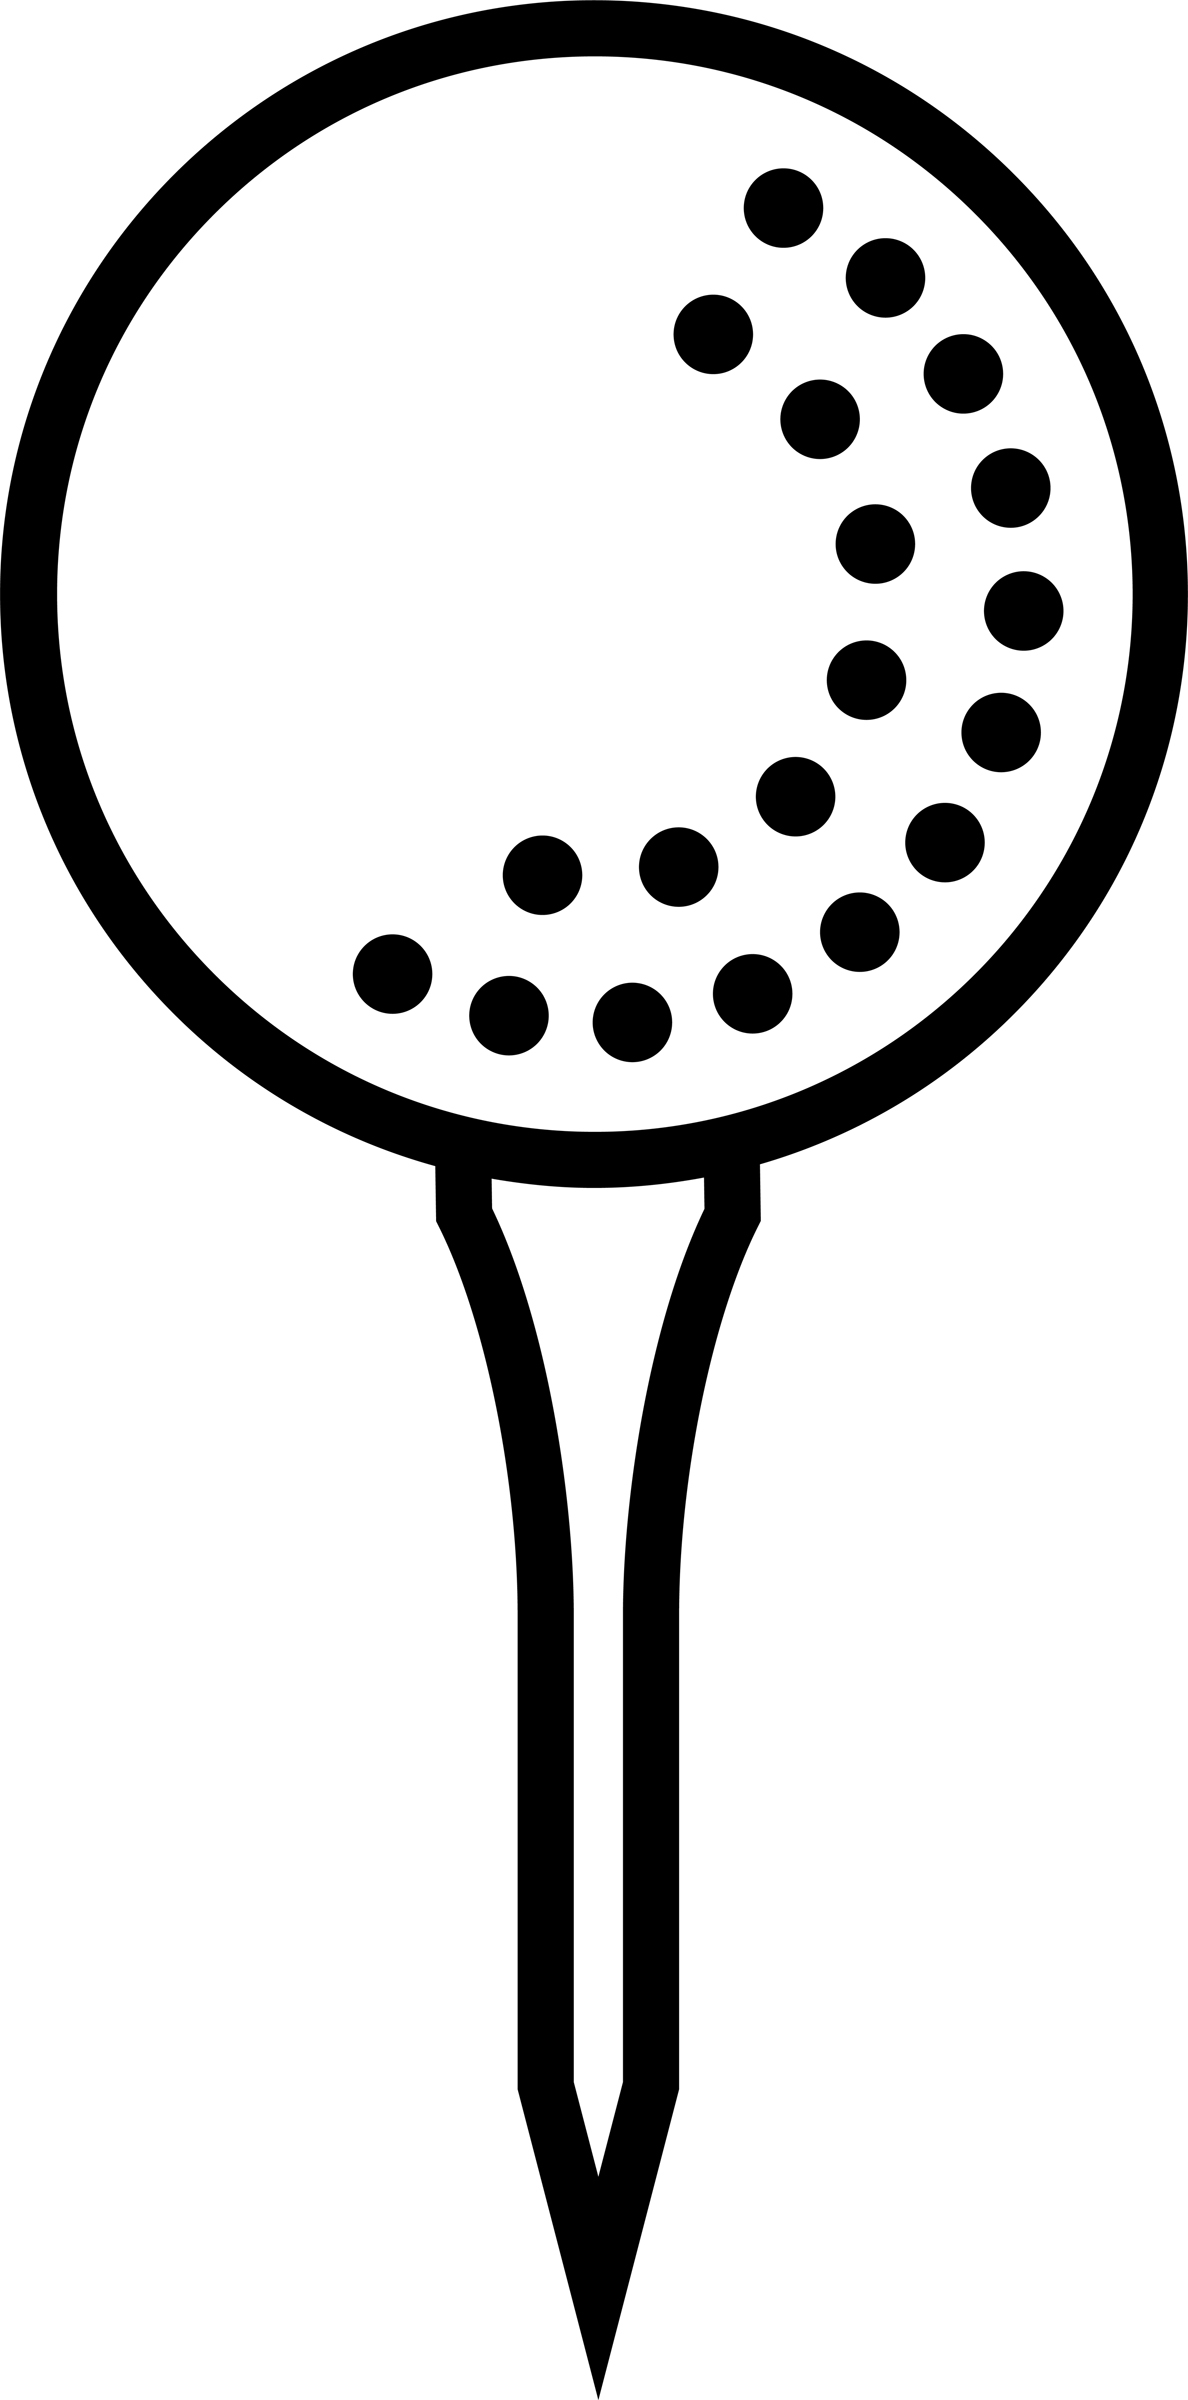 Golf ball clip art free vector clipart images 4